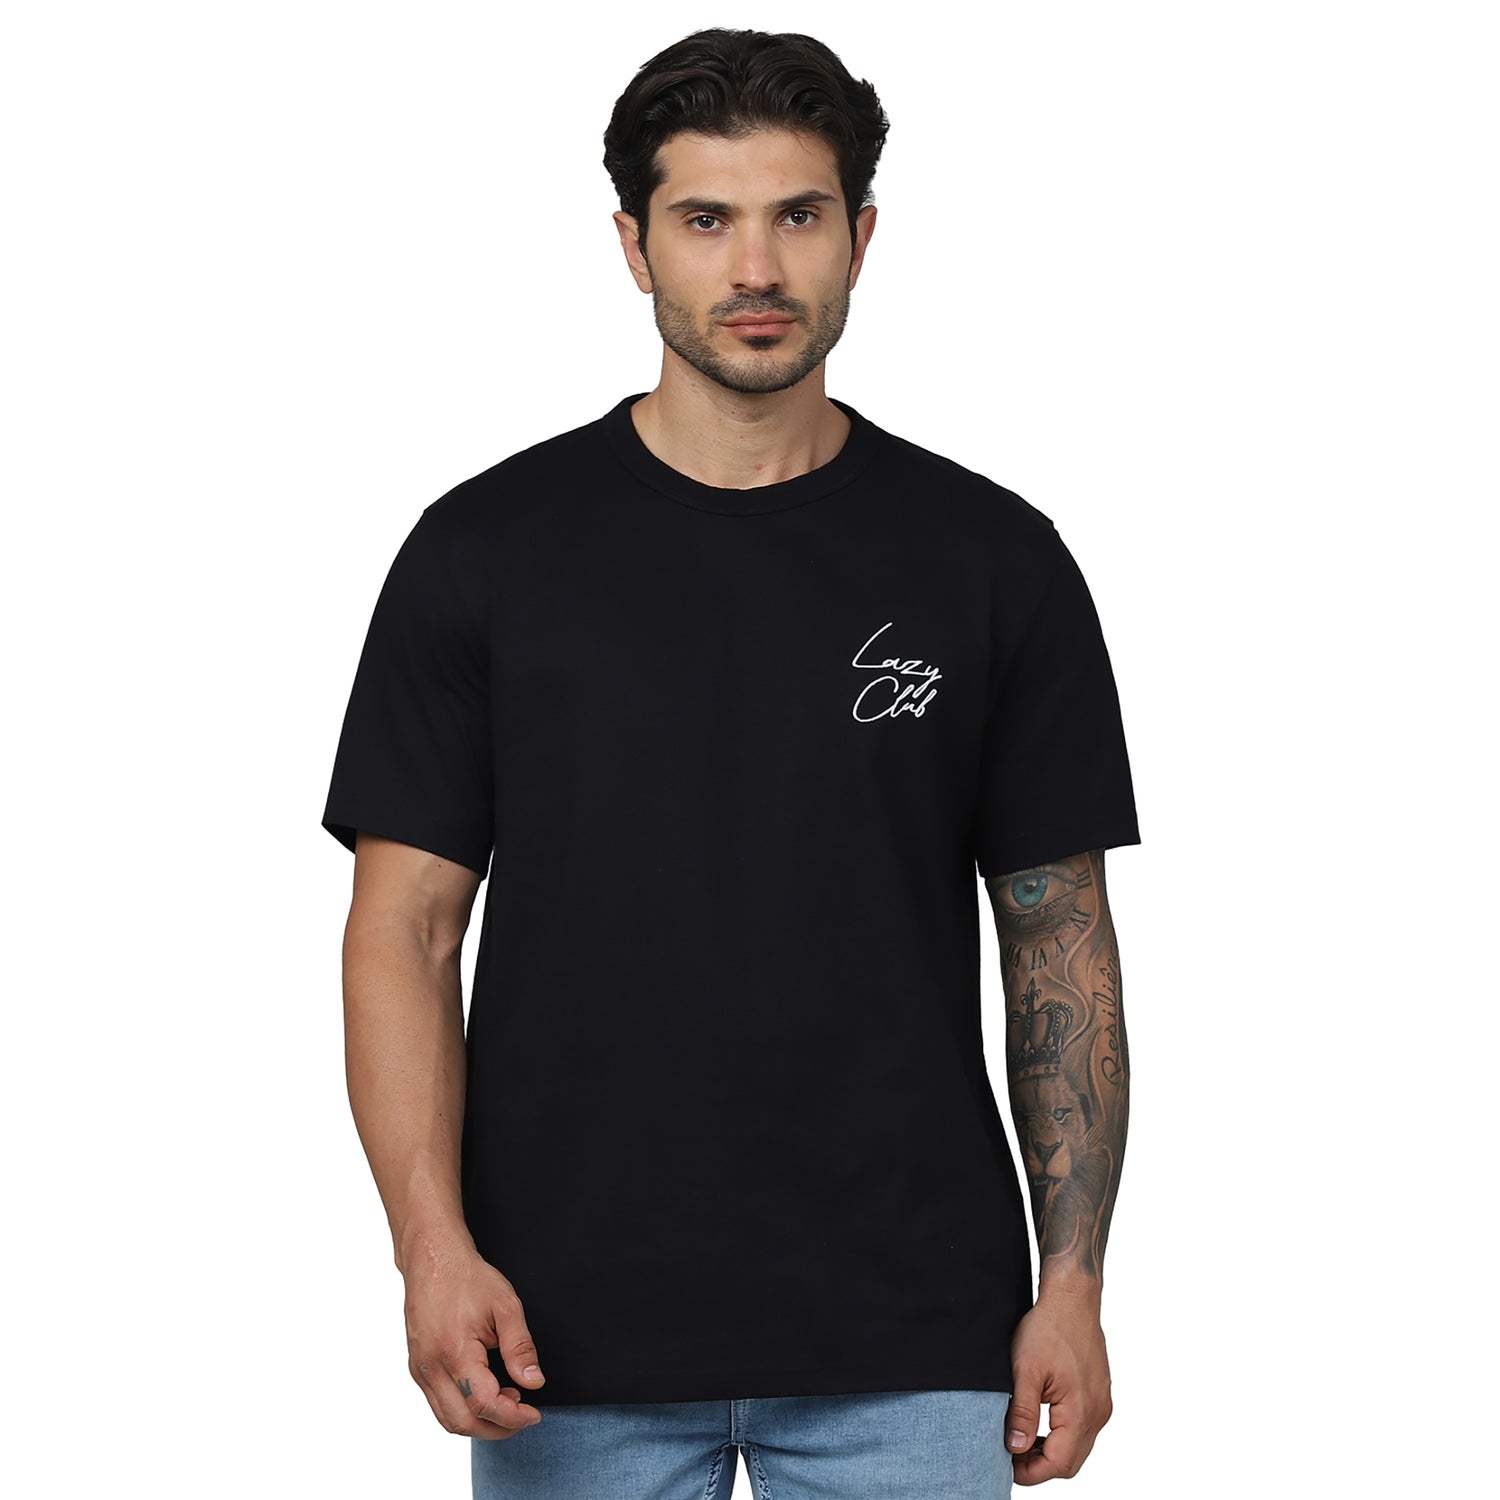 Men's Black Round Neck Printed Regular Fit Cotton Basic Tshirts (GEDOUBLOS)